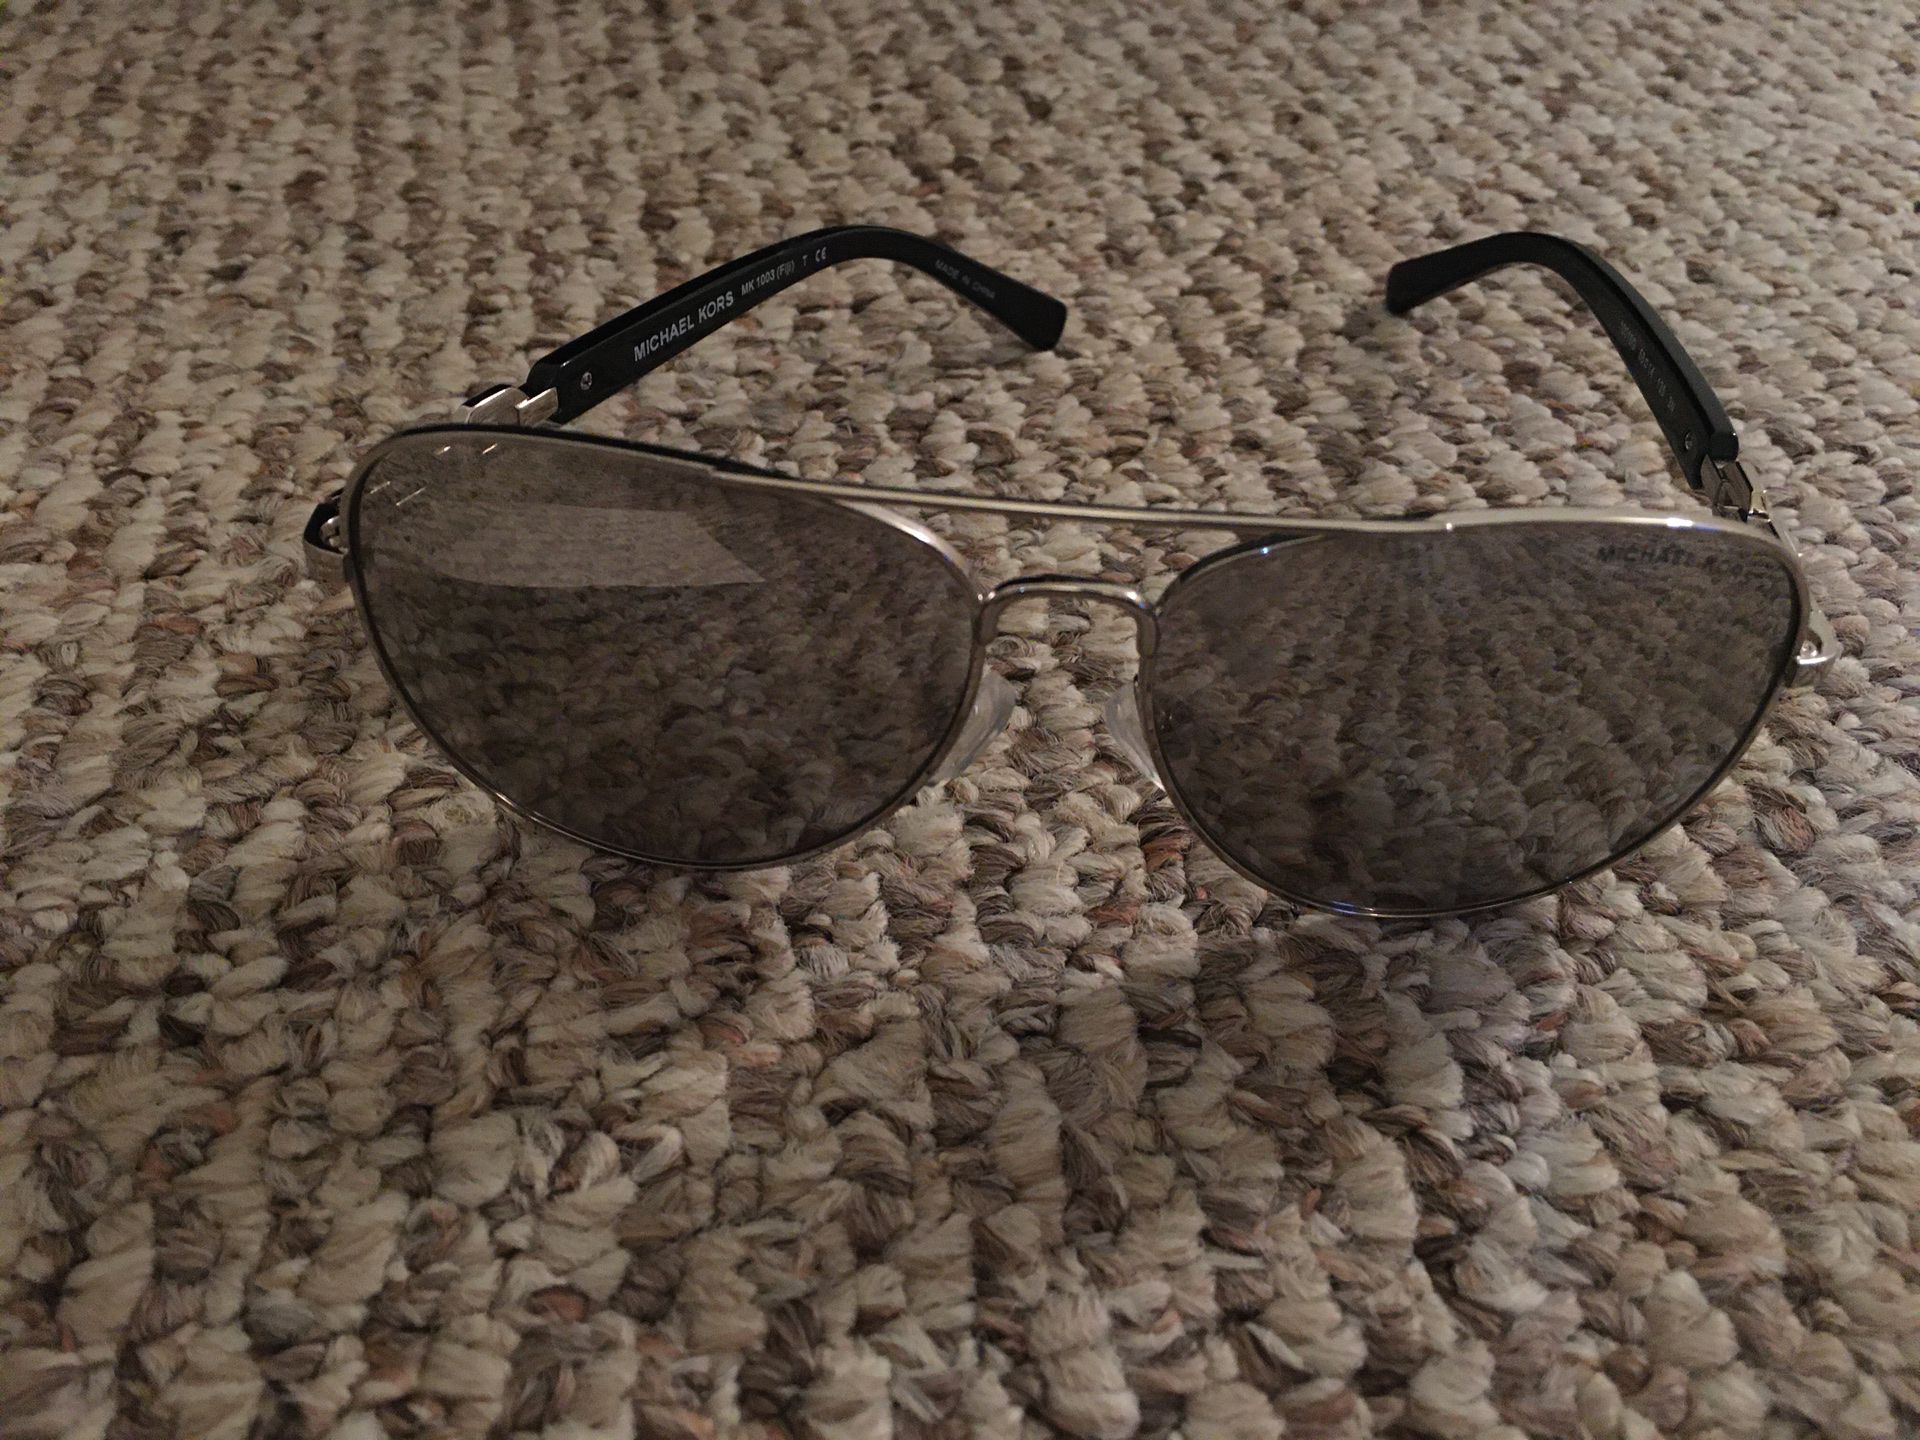 Michael Kors Aviator Sunglasses